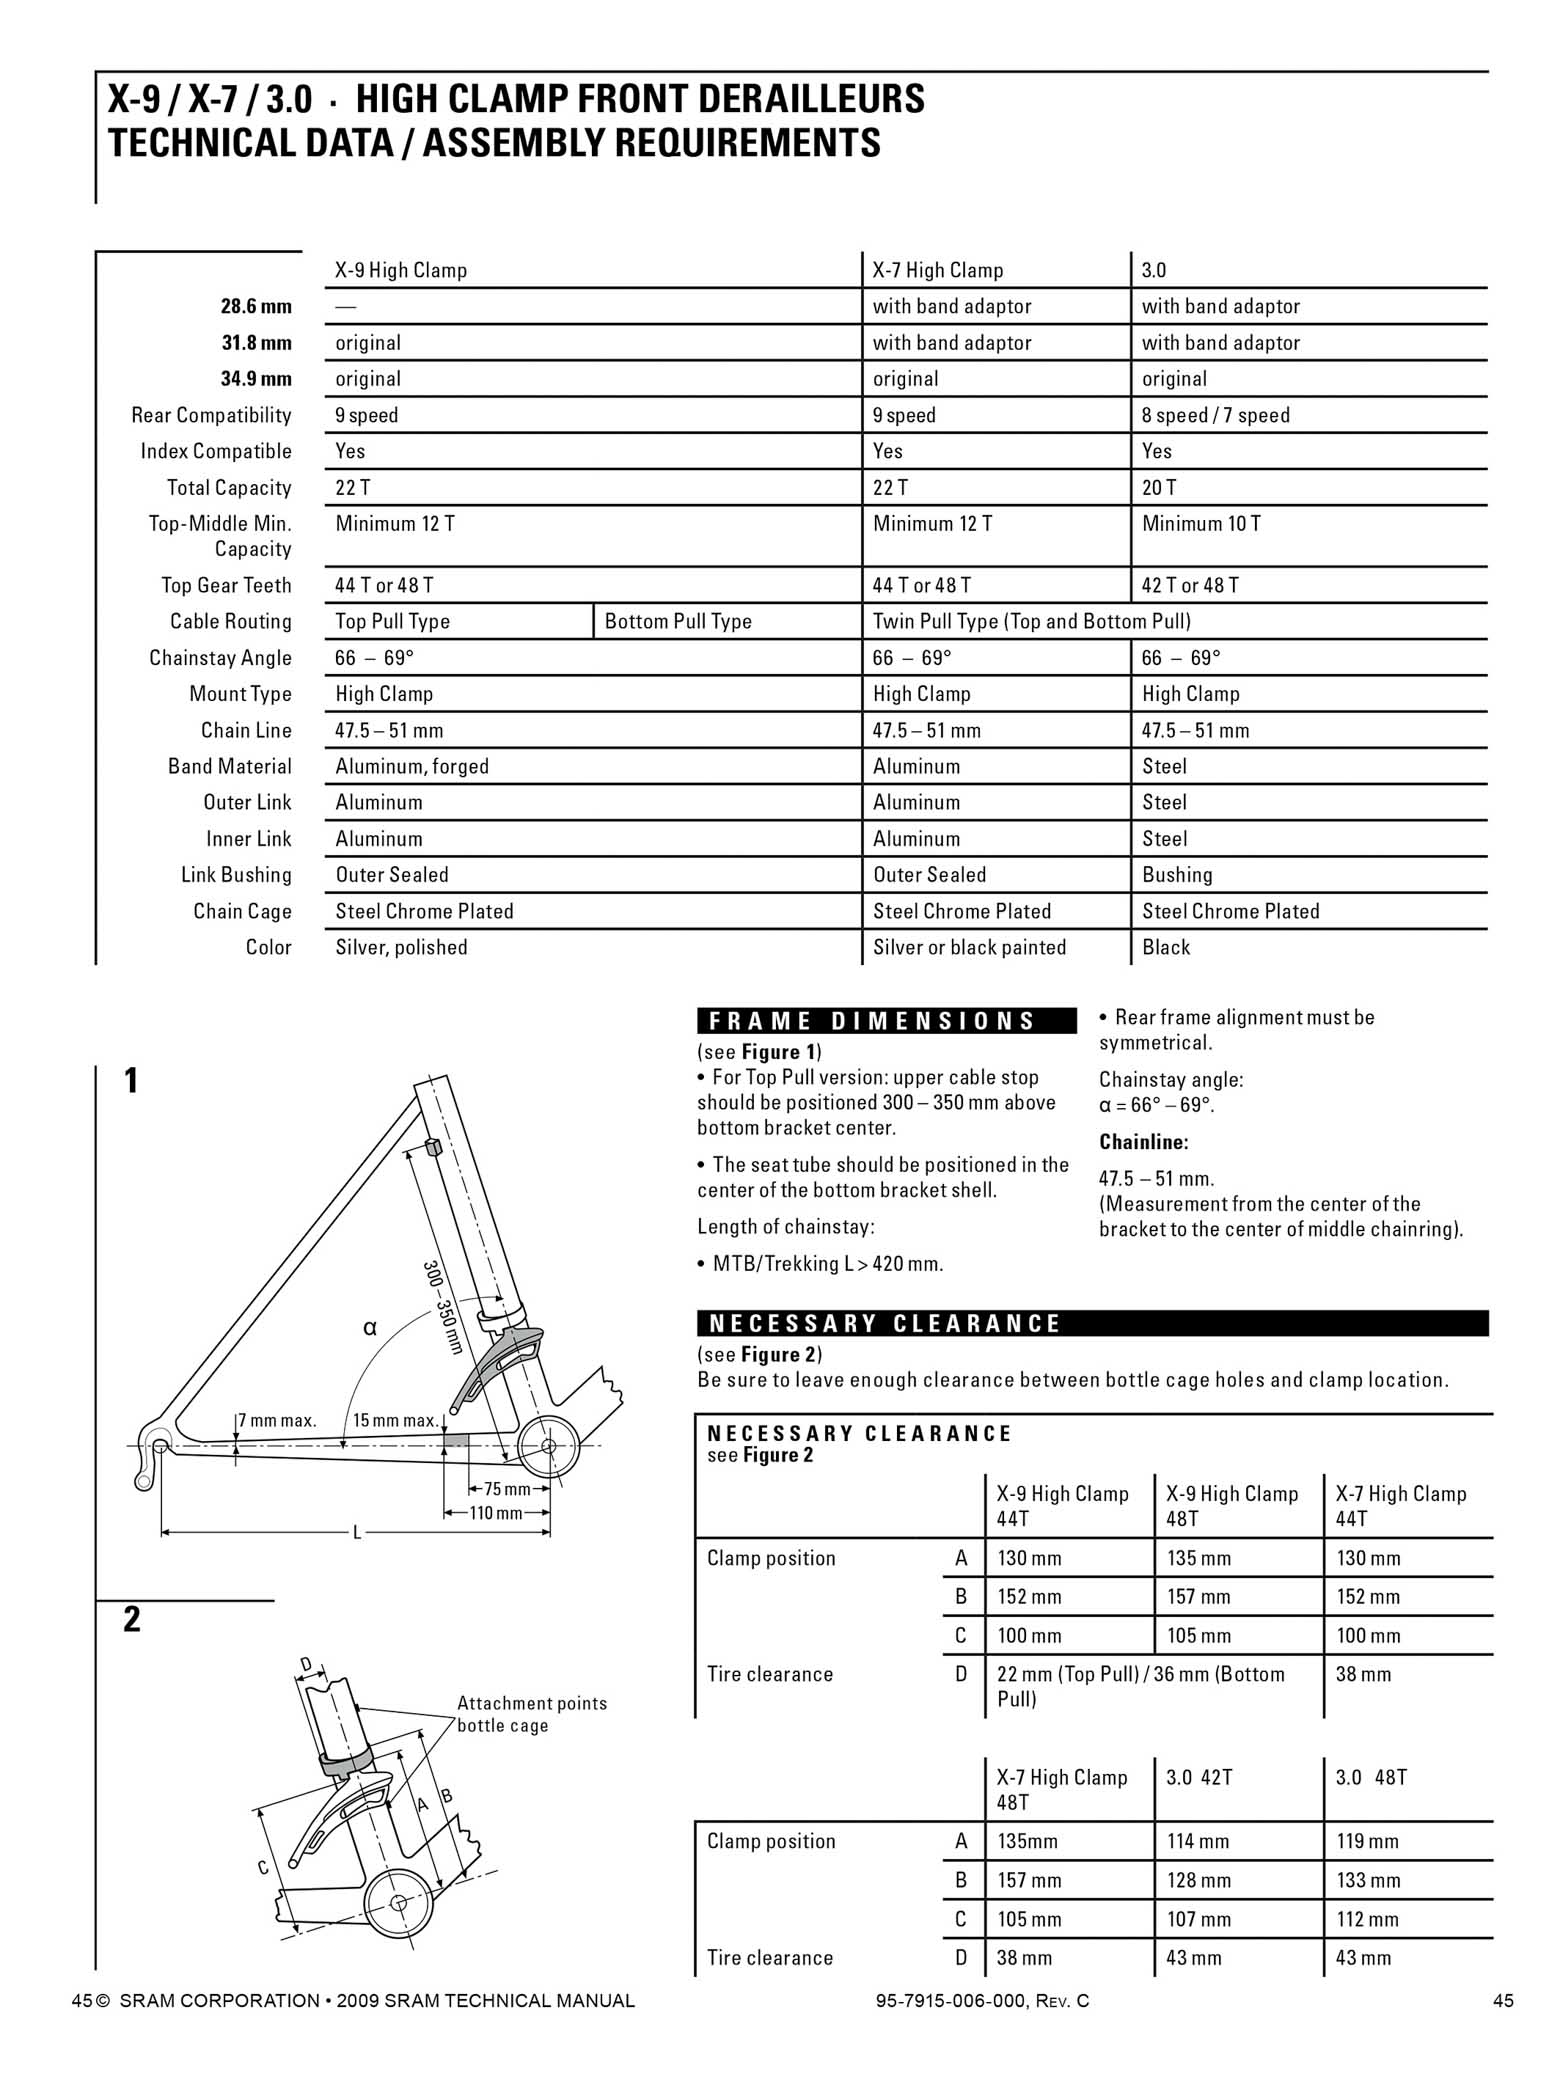 SRAM Technical Manual 2009 page 045 main image